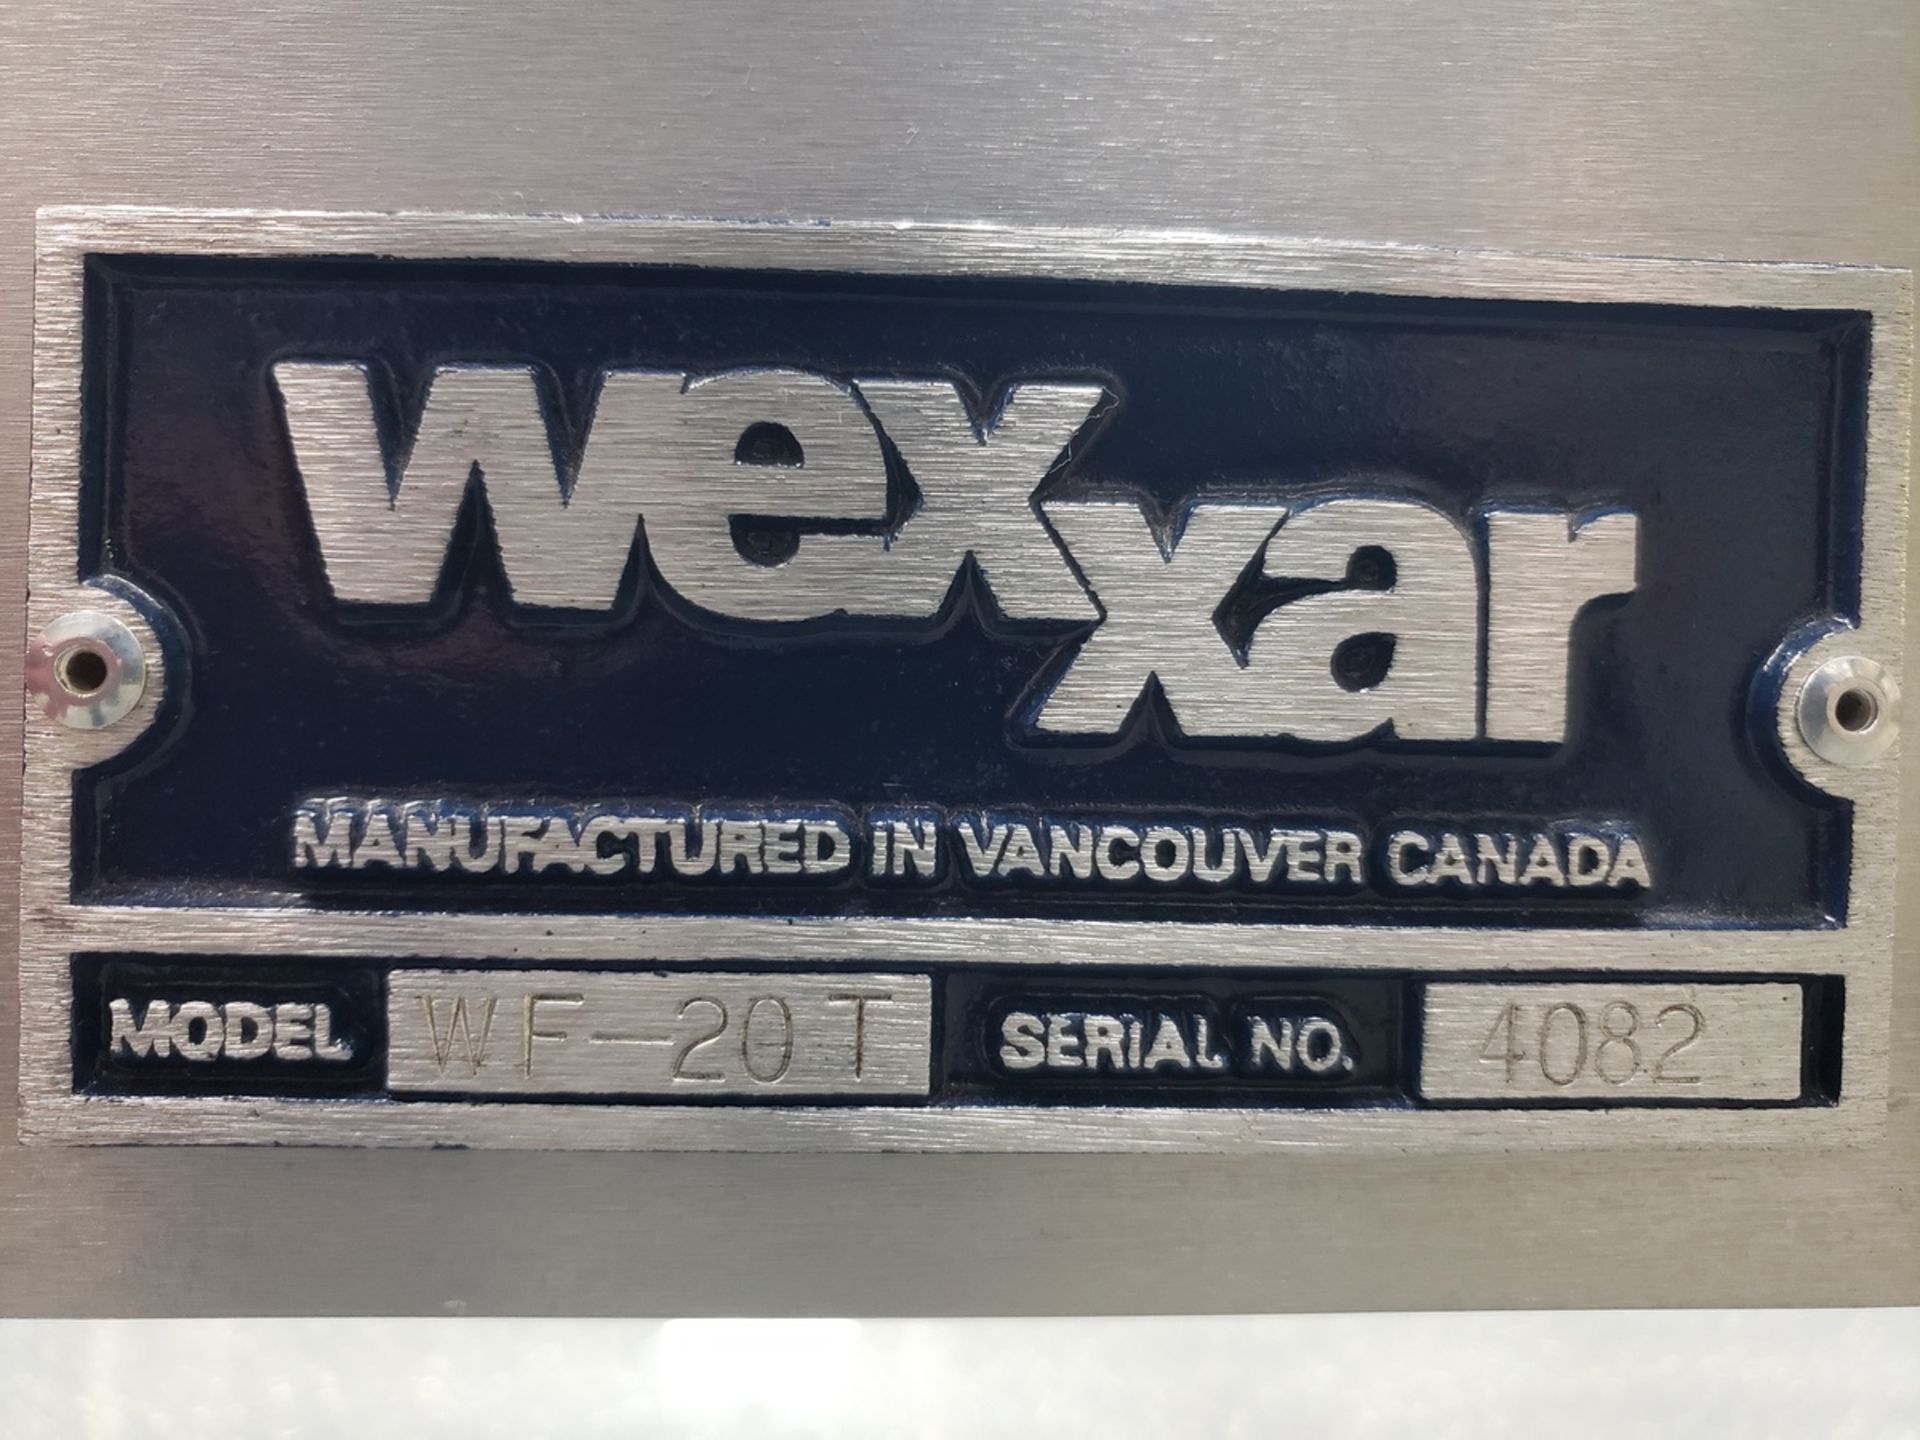 Wexxar Case Former, M# WF-20T, S/N 4082 | Rig Fee $1000 - Image 2 of 6